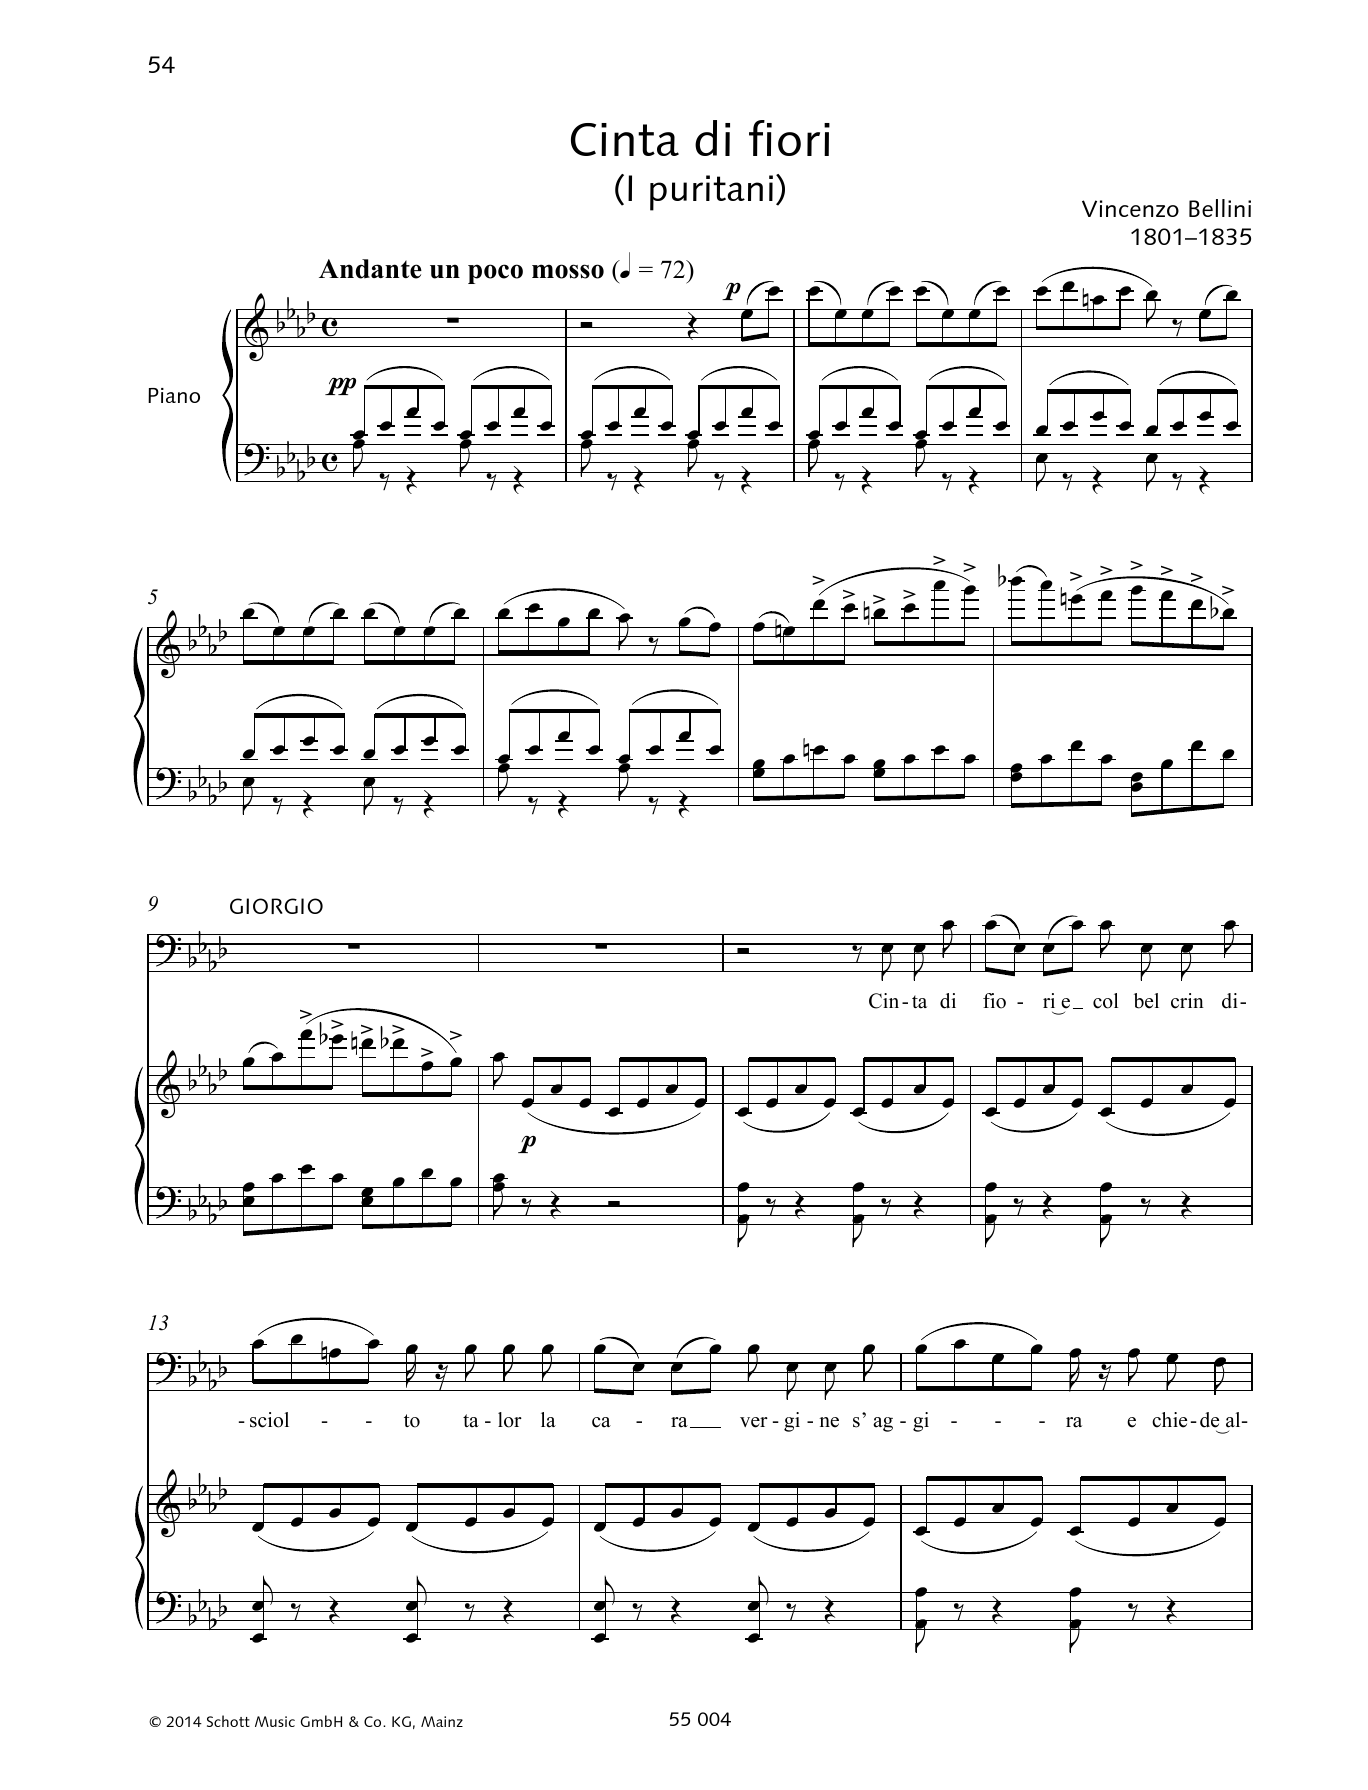 Vincenzo Bellini Cinta di fiori Sheet Music Notes & Chords for Piano & Vocal - Download or Print PDF